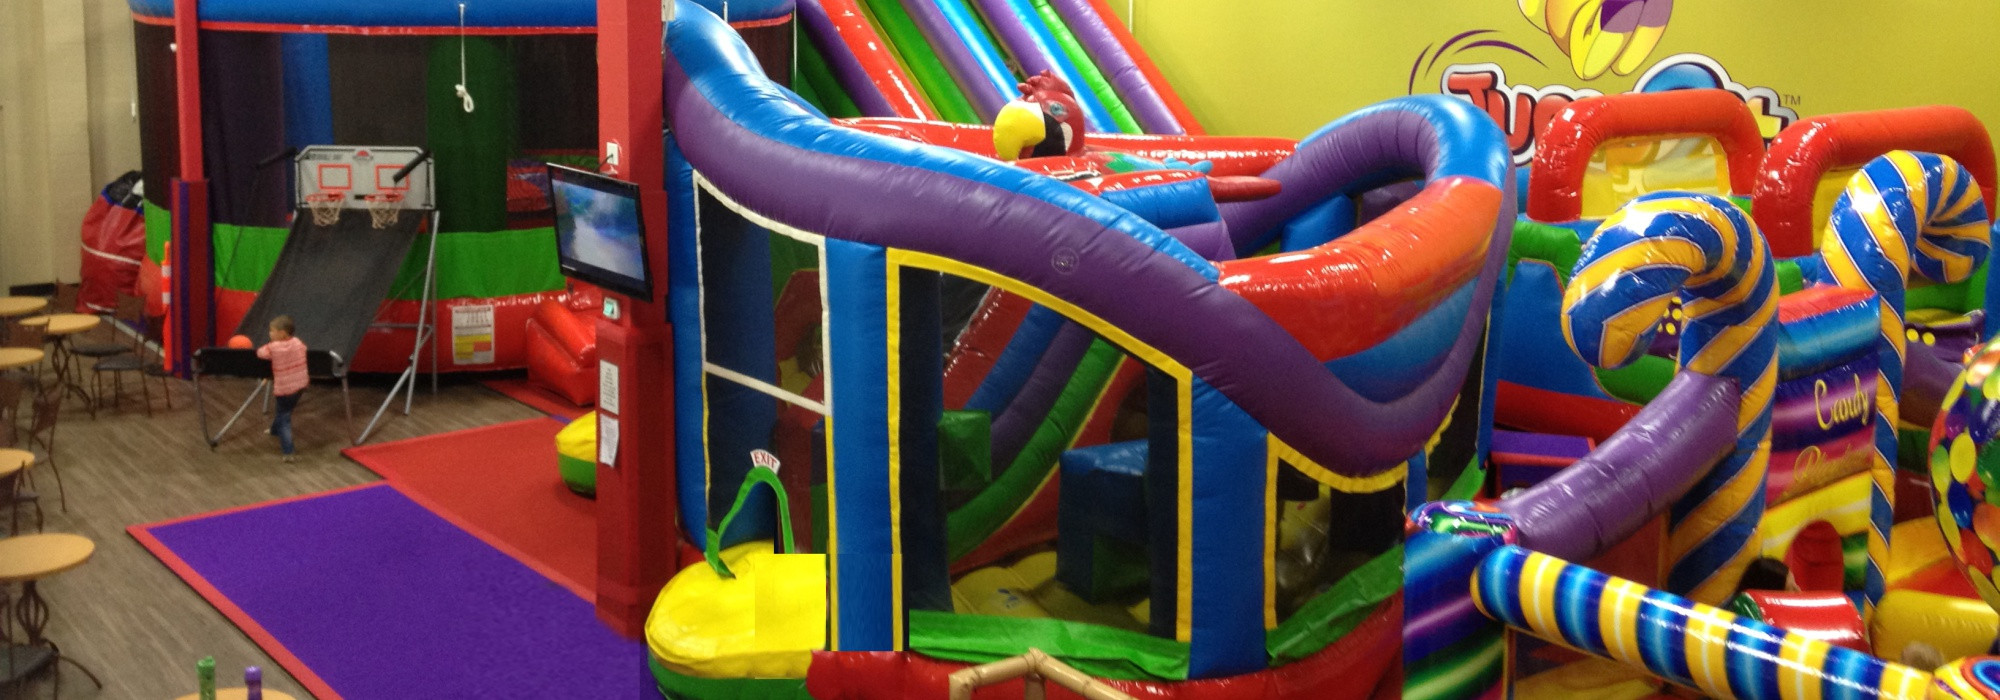 Kids Inflatable Playground
 Bounce house in hamden ct – monkey joes hamden